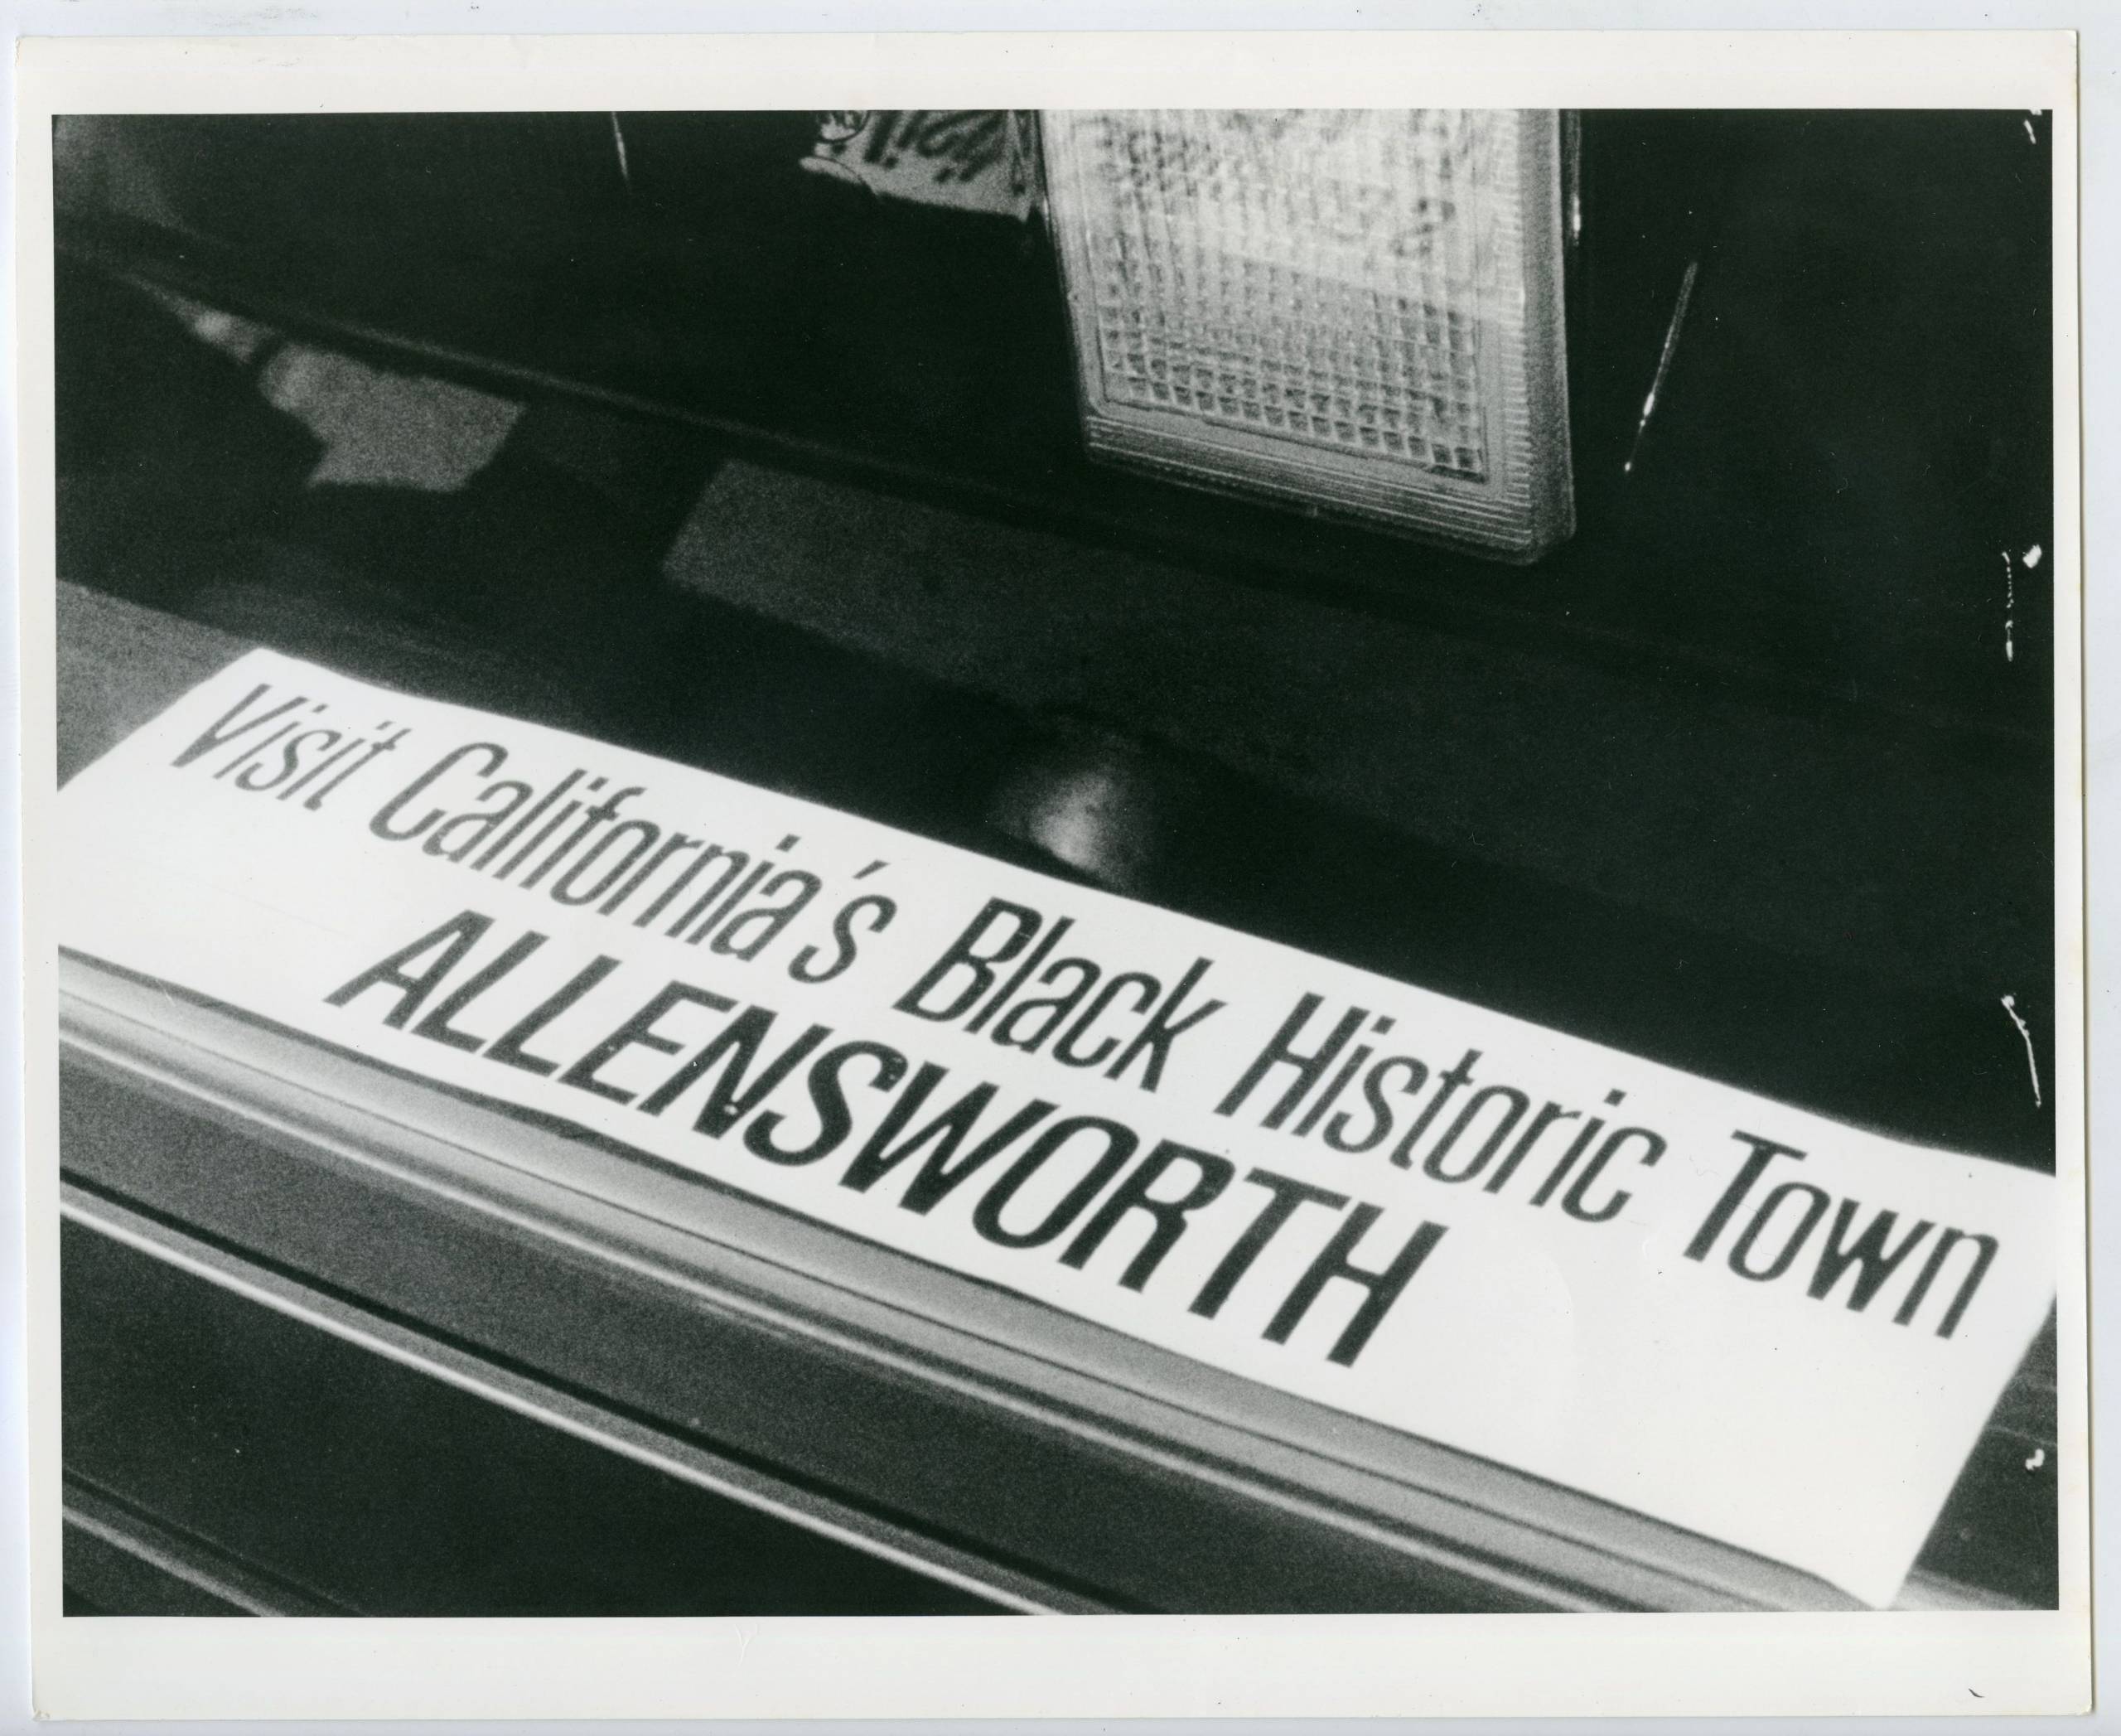 a bumper sticker that reads 'Visit California's Black Historic Town Allensworth'